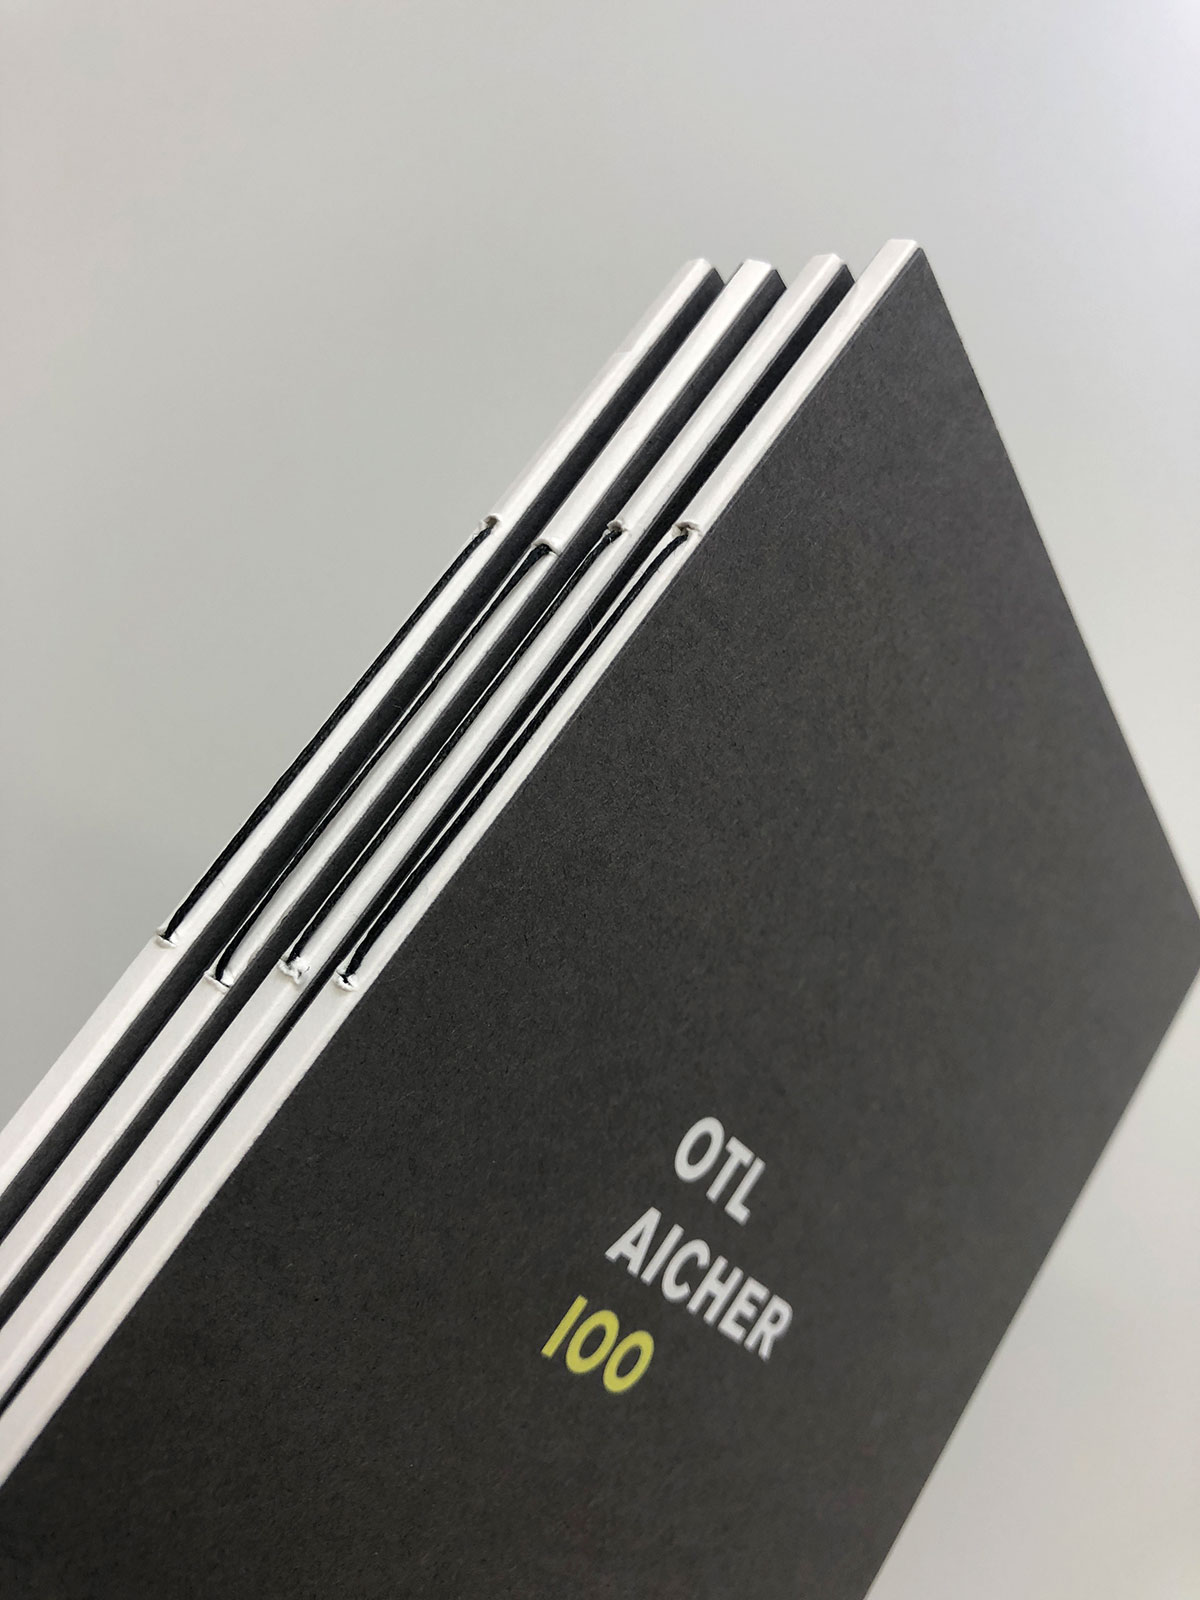 10_hsnr_designkrefeld-edition-publikation_otl-aicher-100